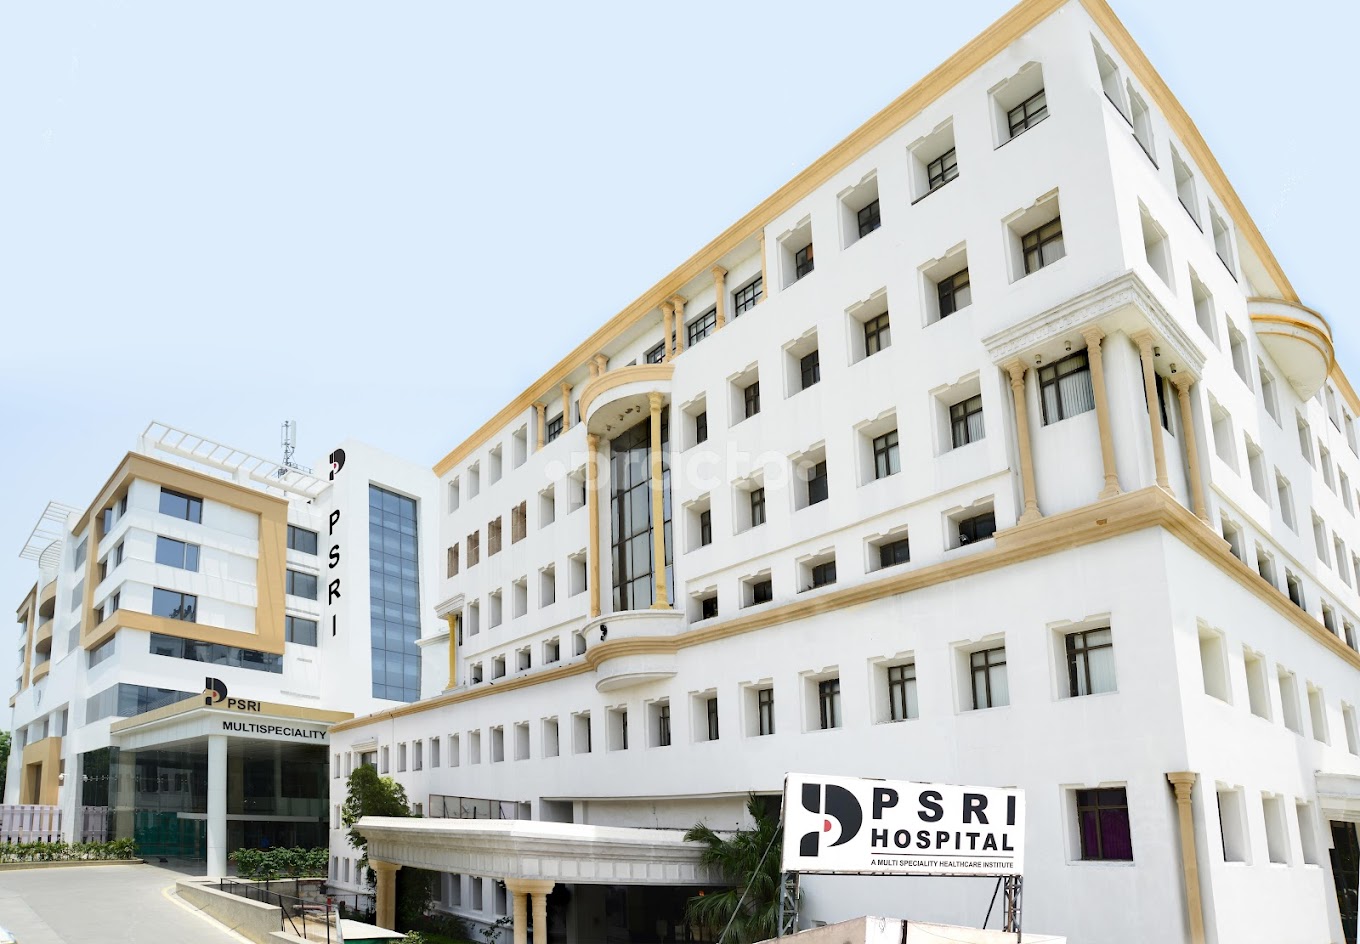 PSRI Multispeciality Hospital Delhi  Medical Services | Hospitals